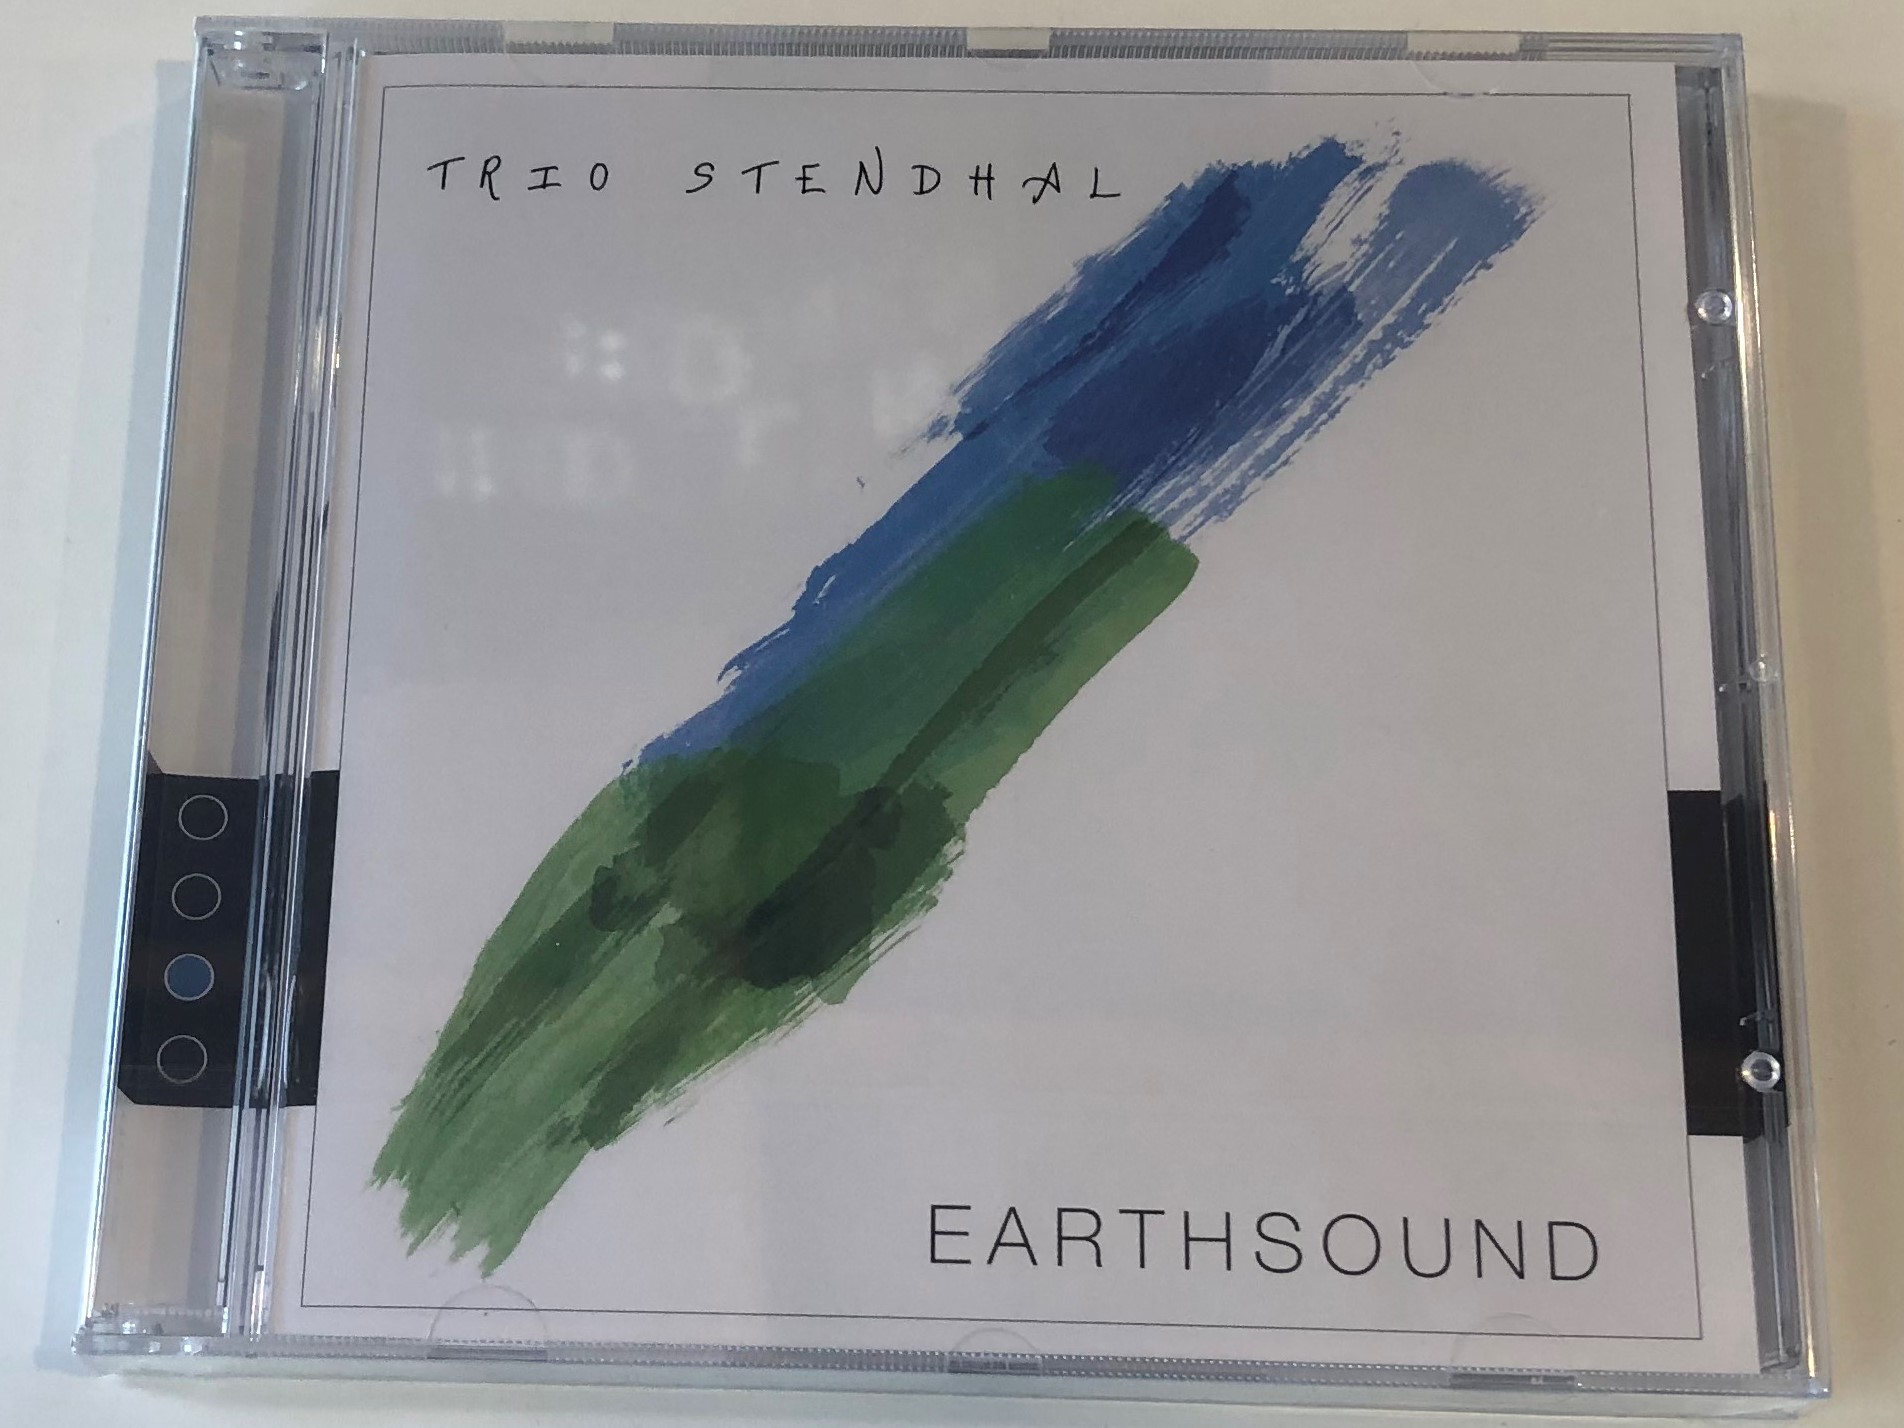 trio-stendhal-earthsound-tom-tom-records-audio-cd-2009-ttcd-125-1-.jpg